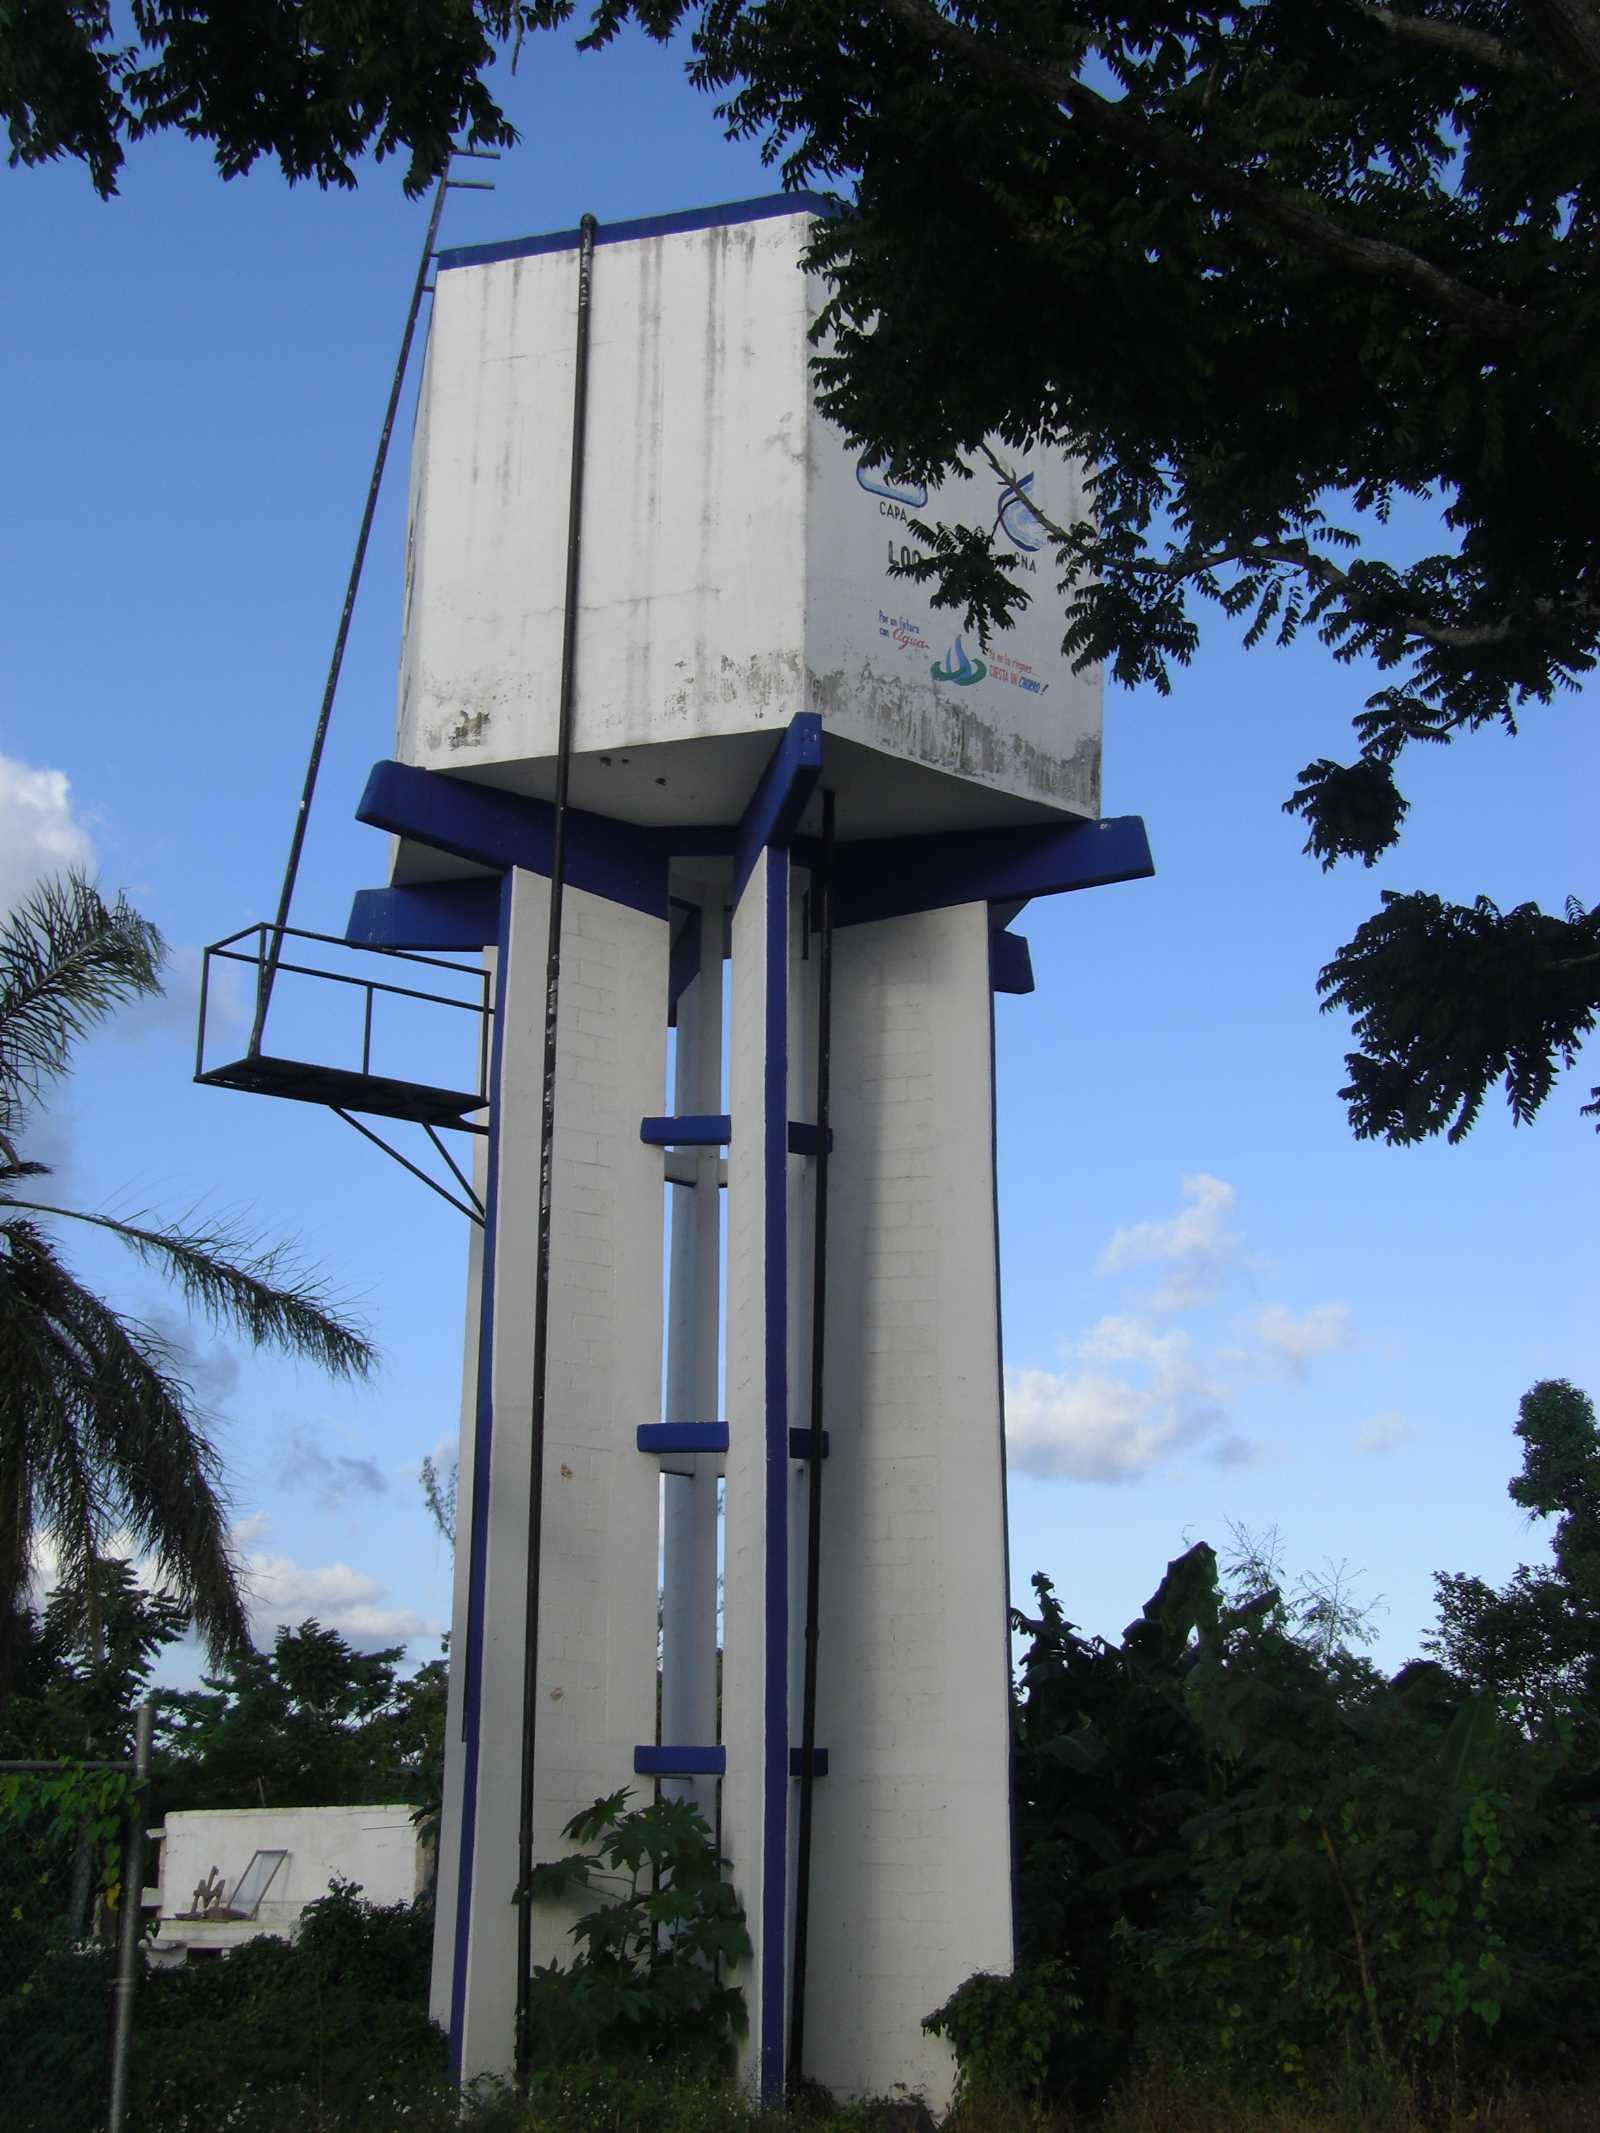 CIMG08

09 water tower 2
